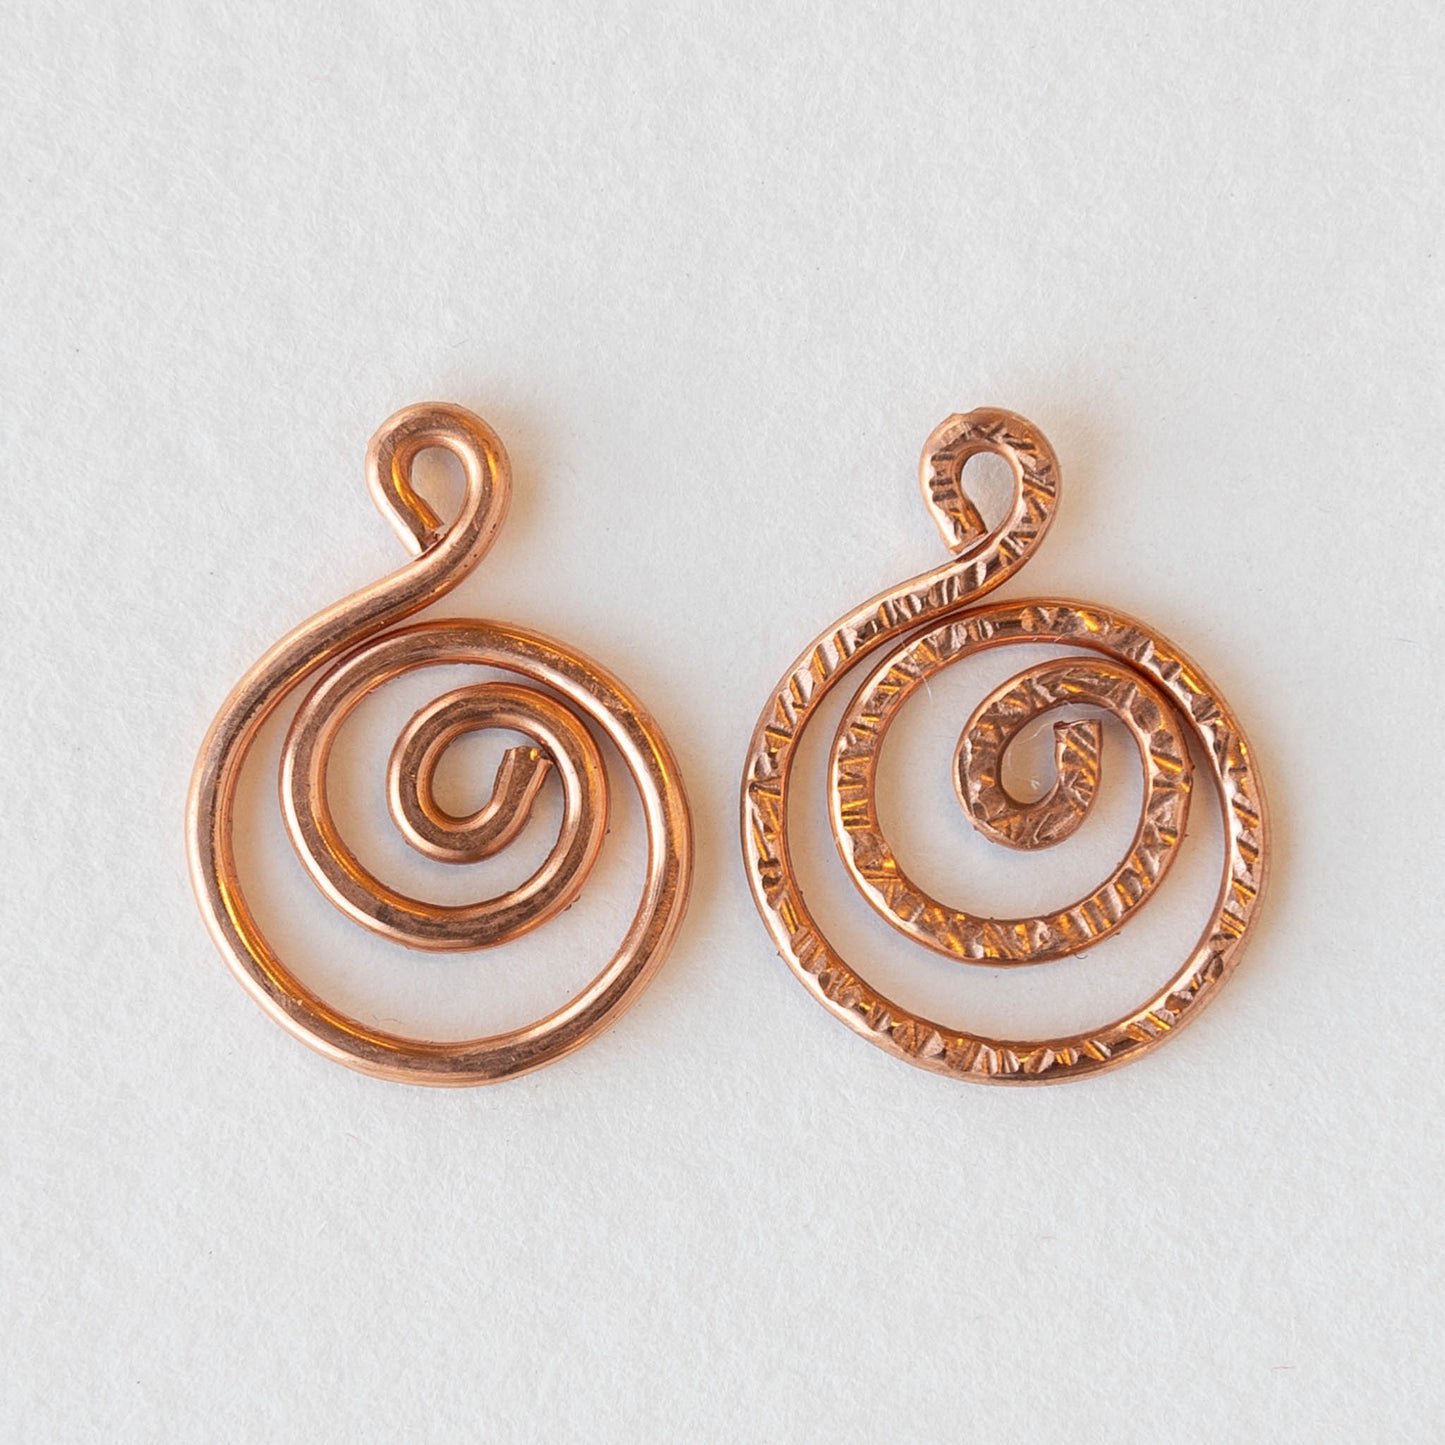 Handmade Textured Copper Spiral - 2